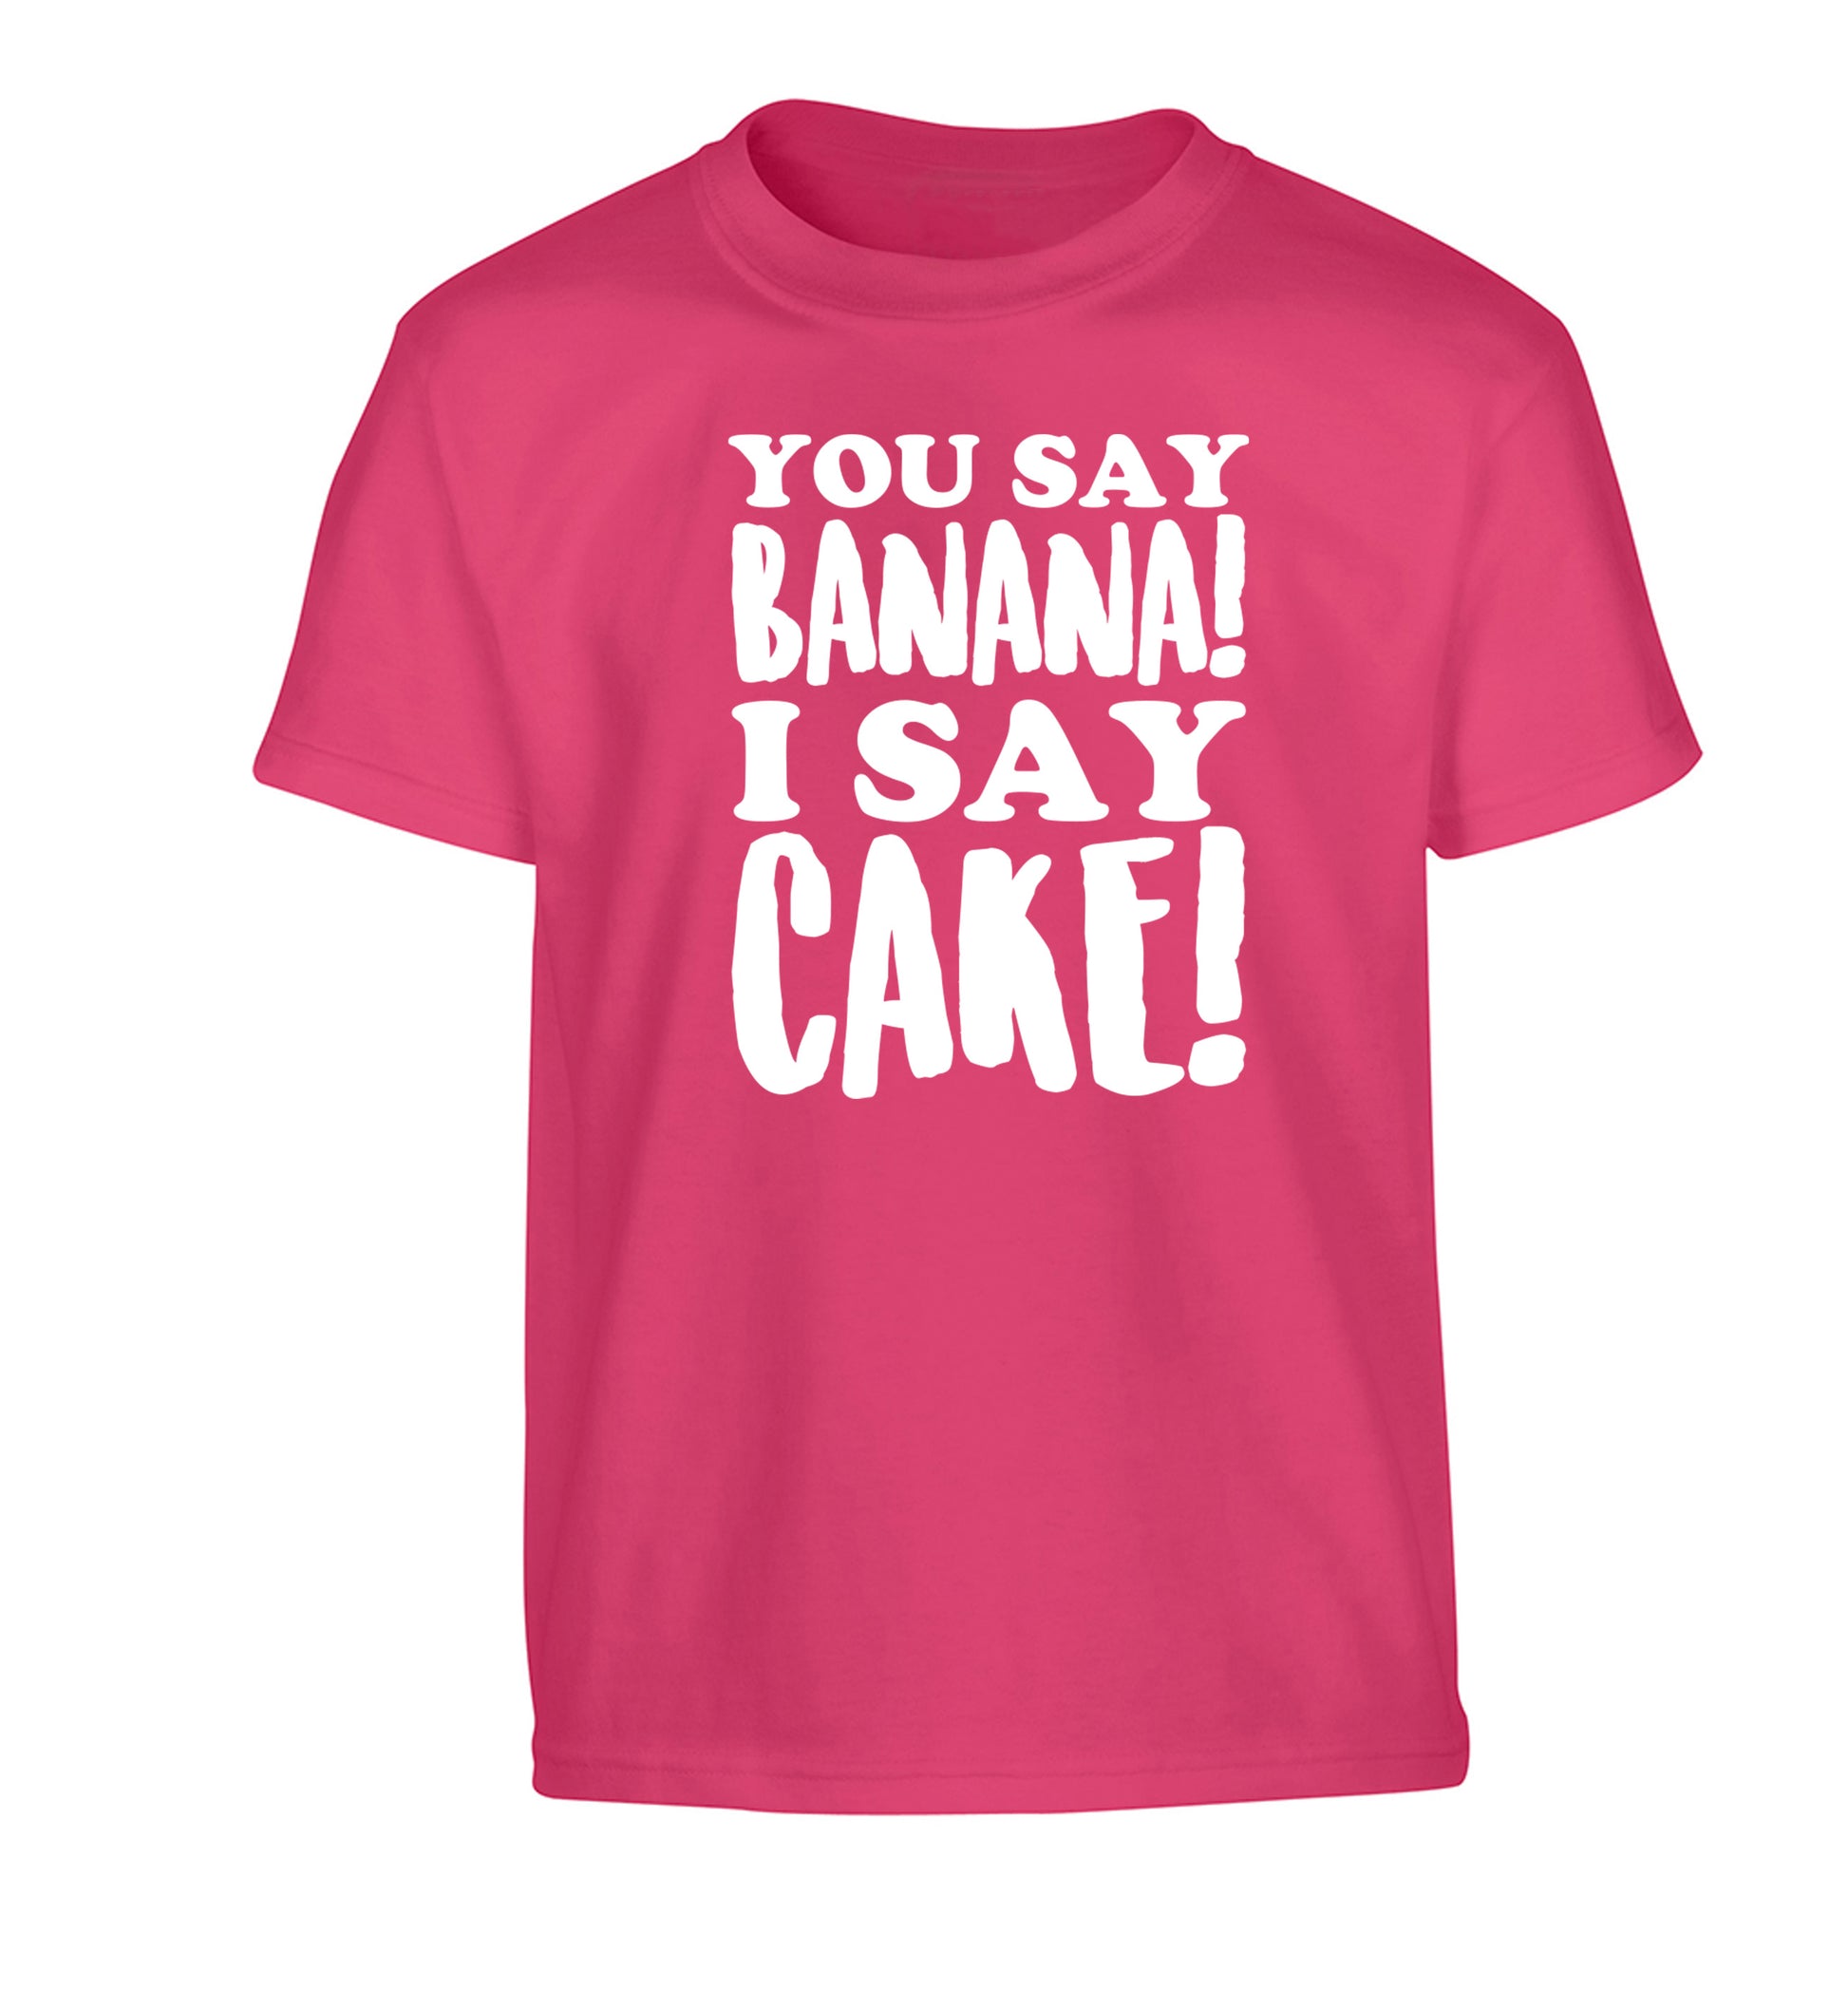 You say banana I say cake! Children's pink Tshirt 12-14 Years